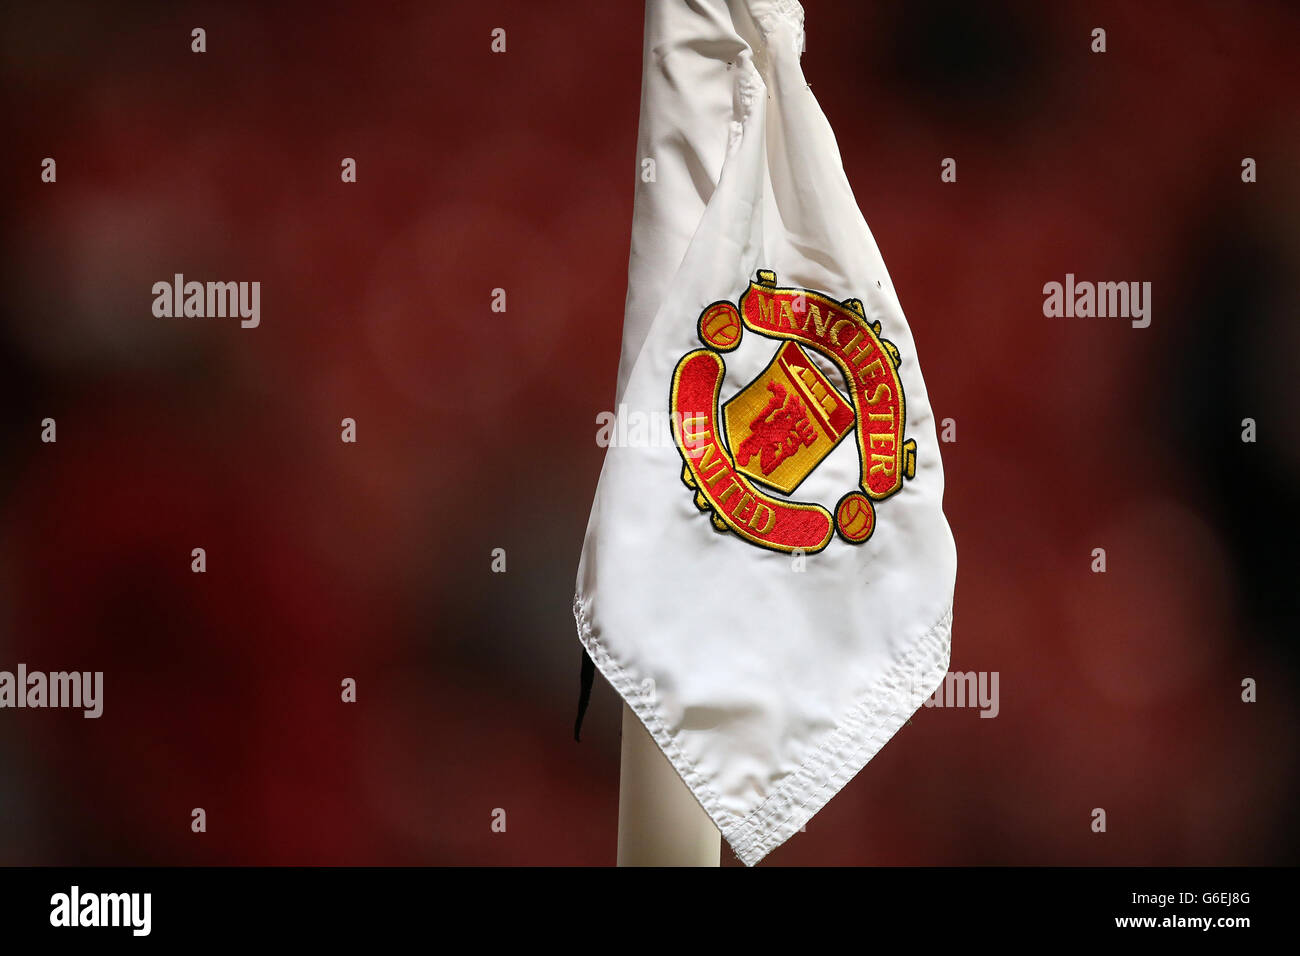 Football - Capital One Cup - troisième tour - Manchester United / Liverpool - Old Trafford.Logo Manchester United sur un drapeau d'angle Banque D'Images